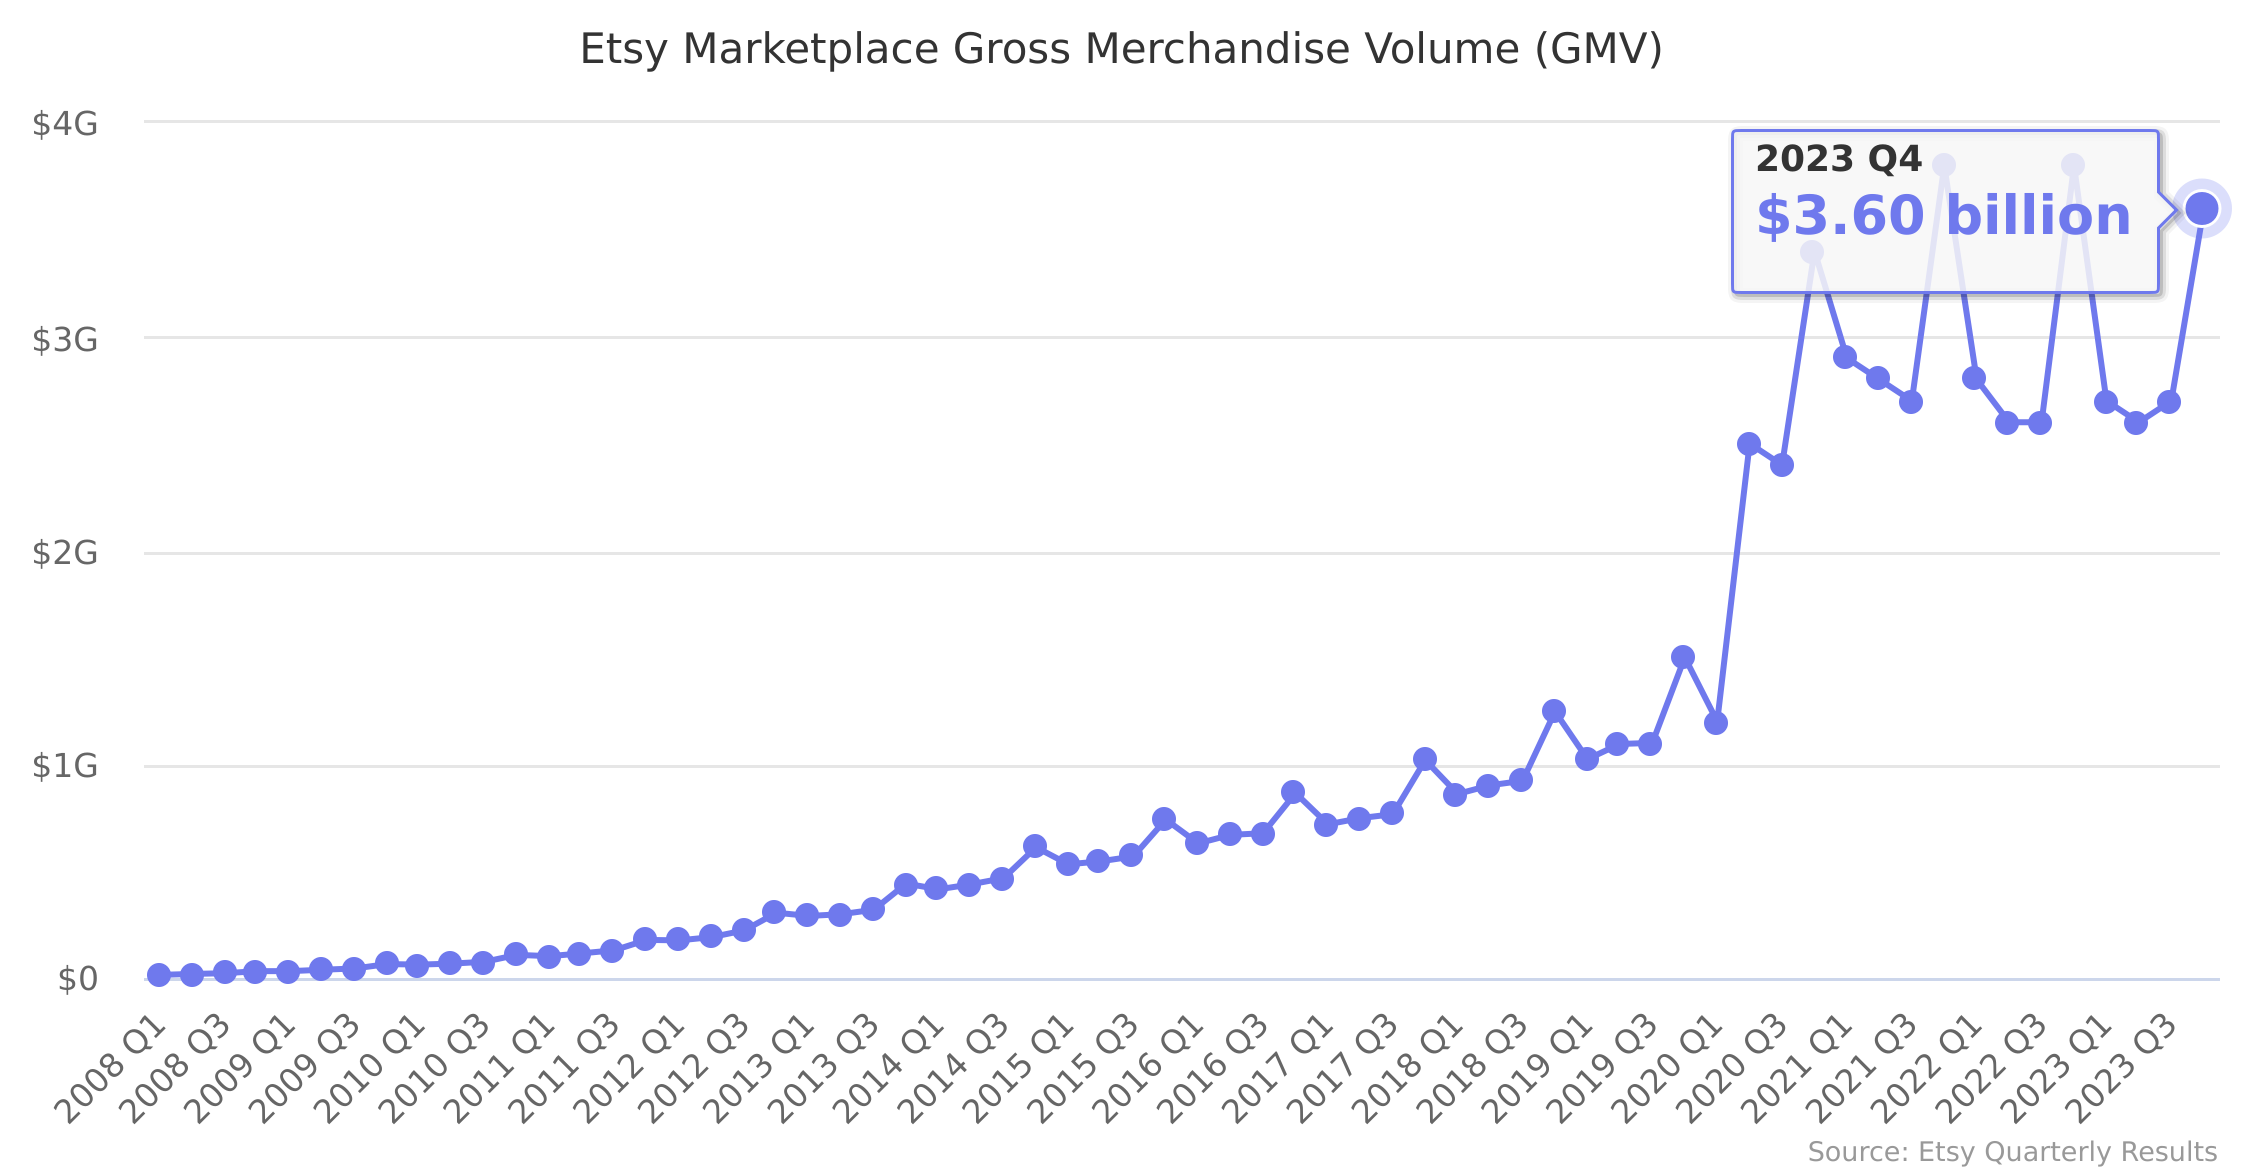 Etsy Marketplace Gross Merchandise Volume (GMV) 2008-2023